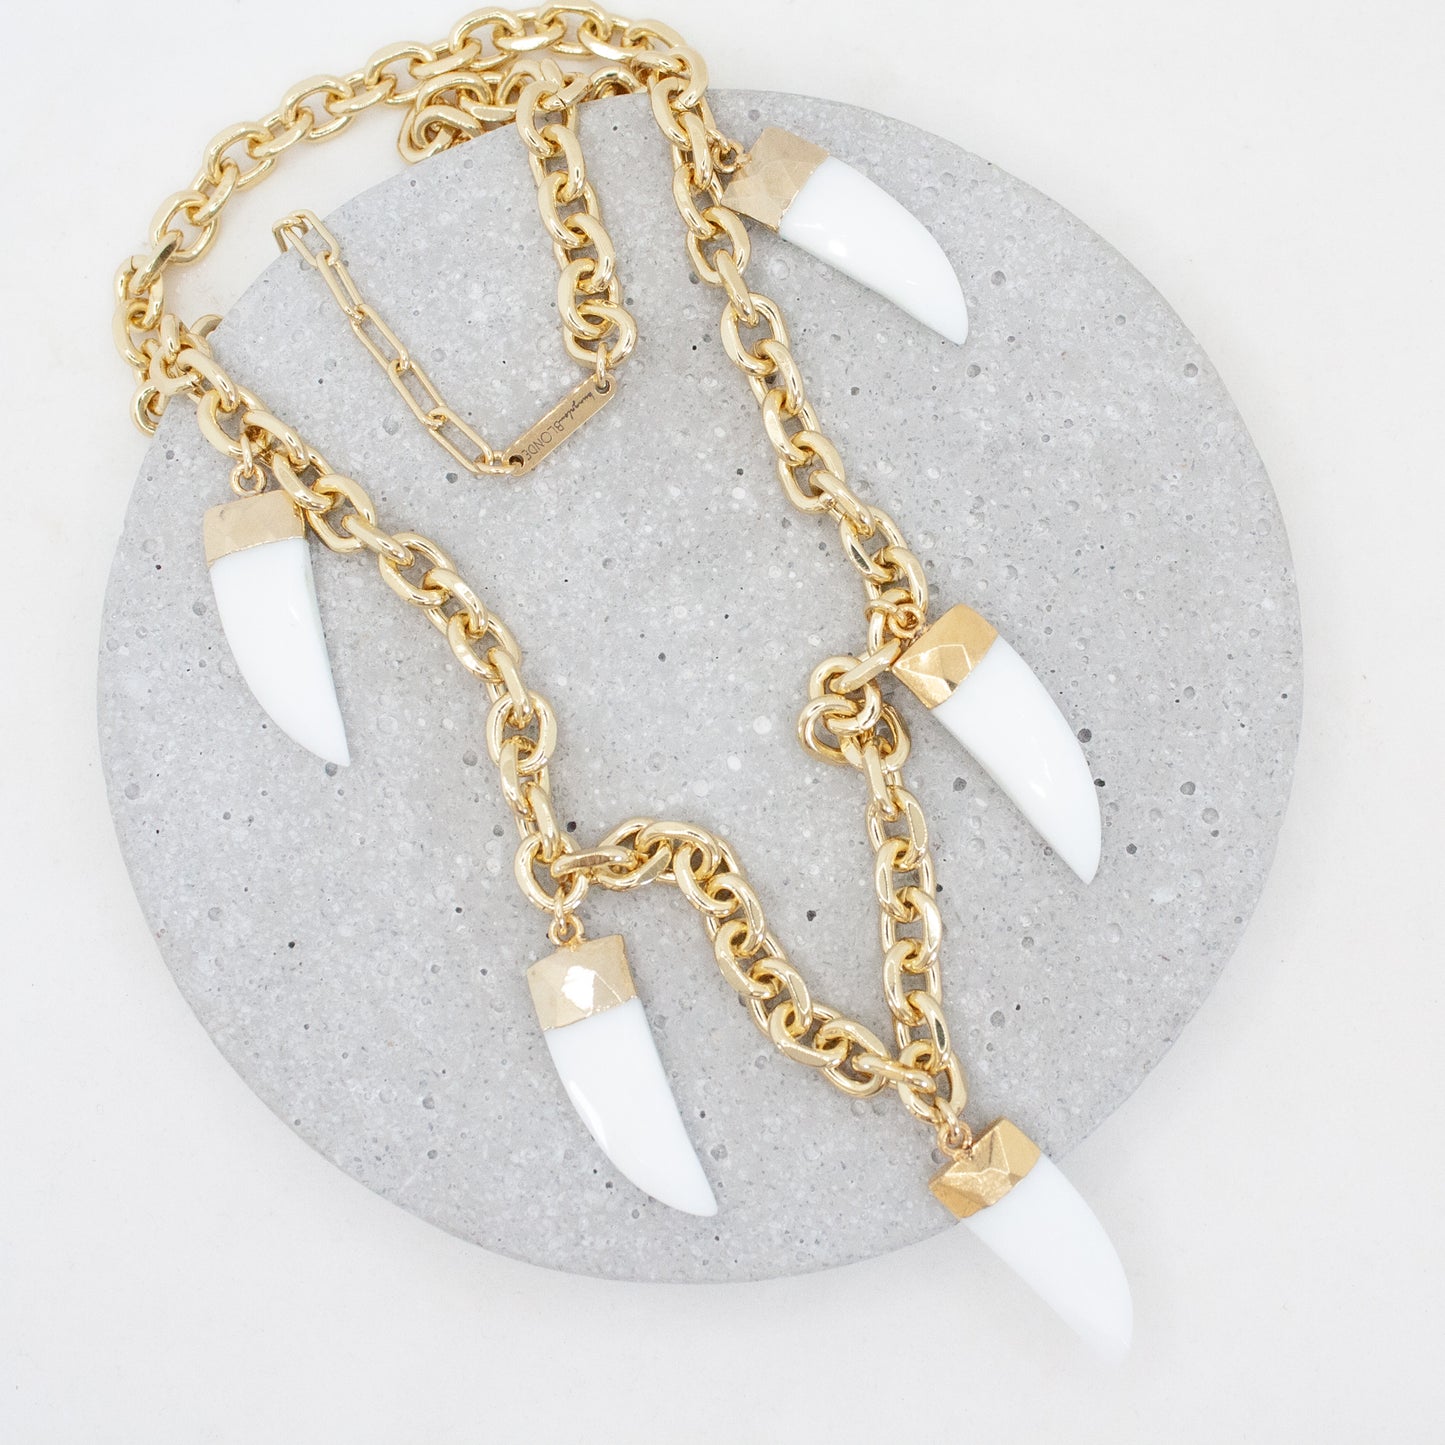 Malibu Lotus Necklace :: 24k Gold Filled